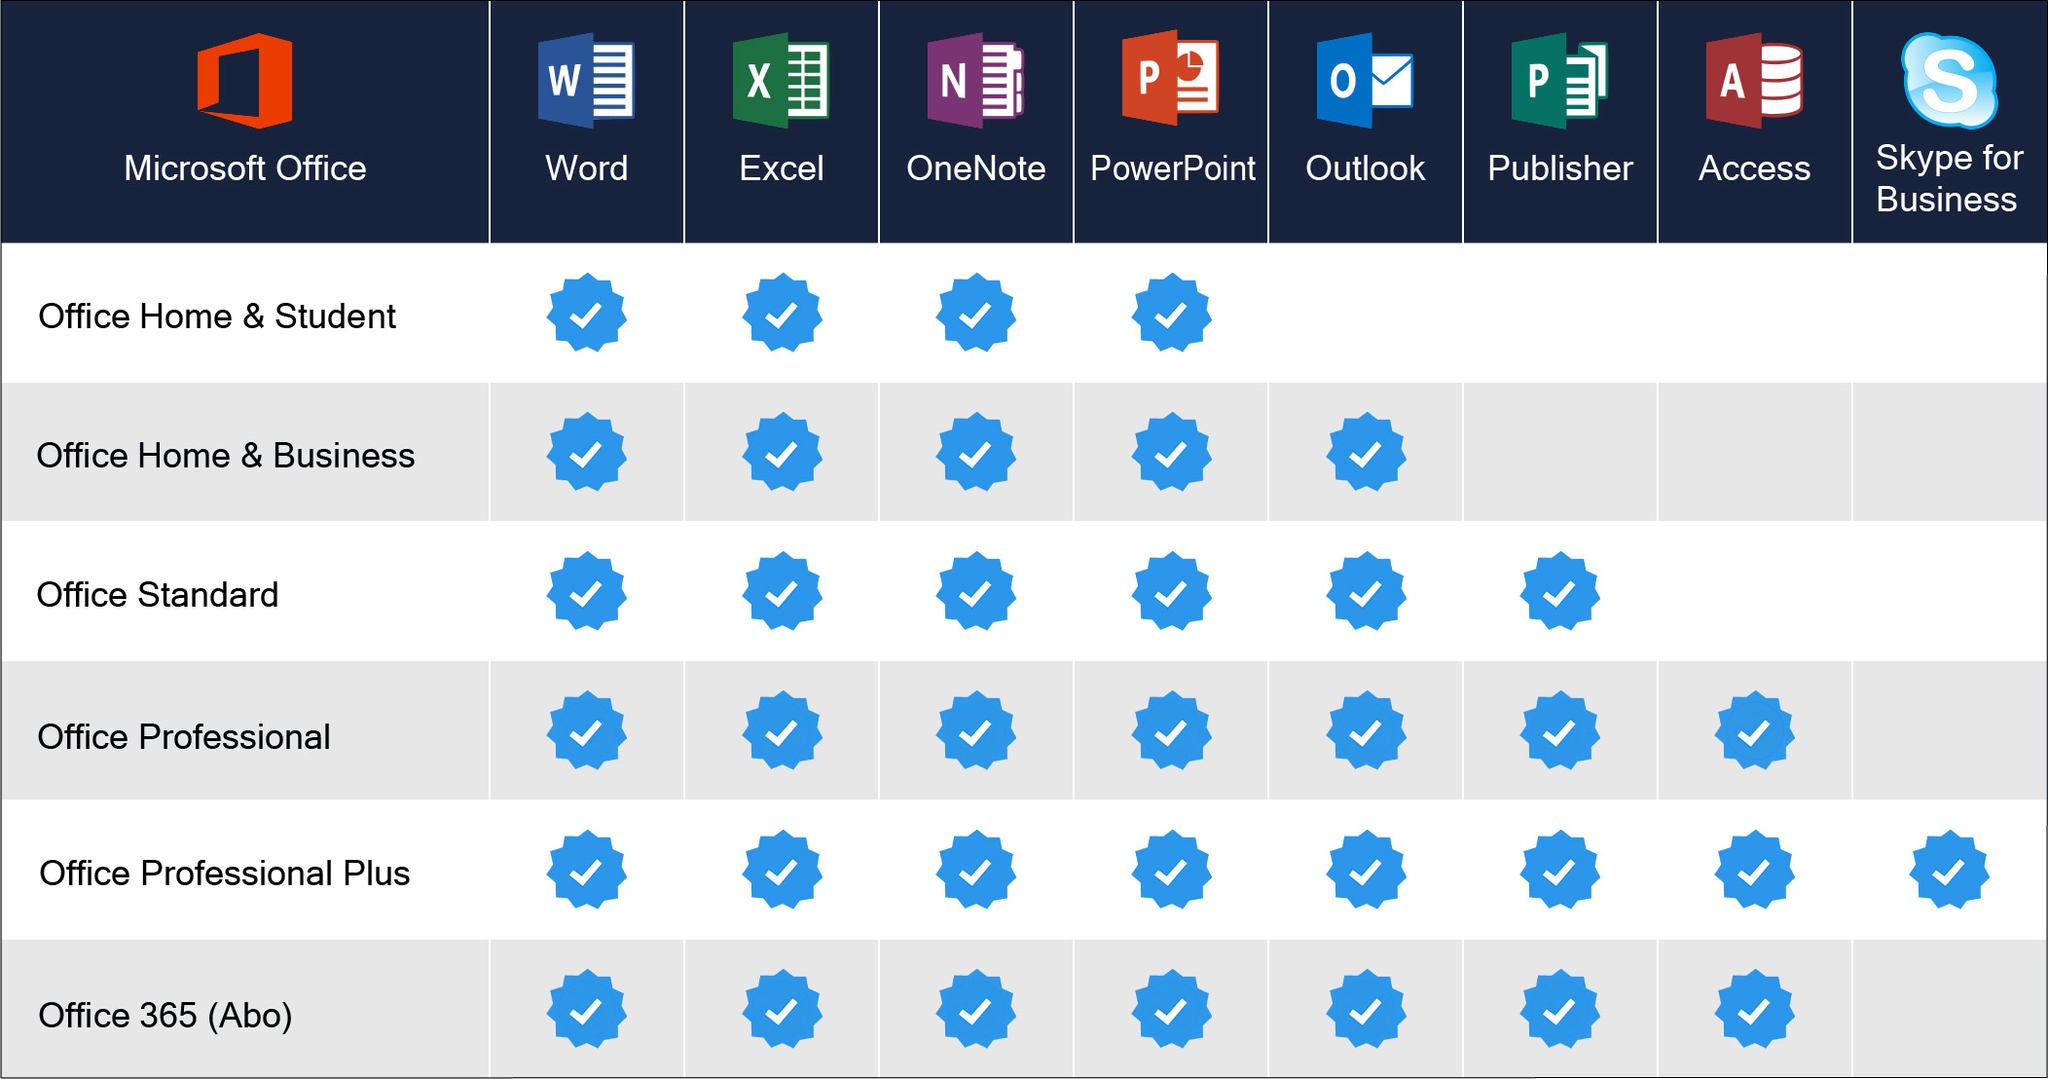 Microsoft Office 2019 Professional Plus | Windows